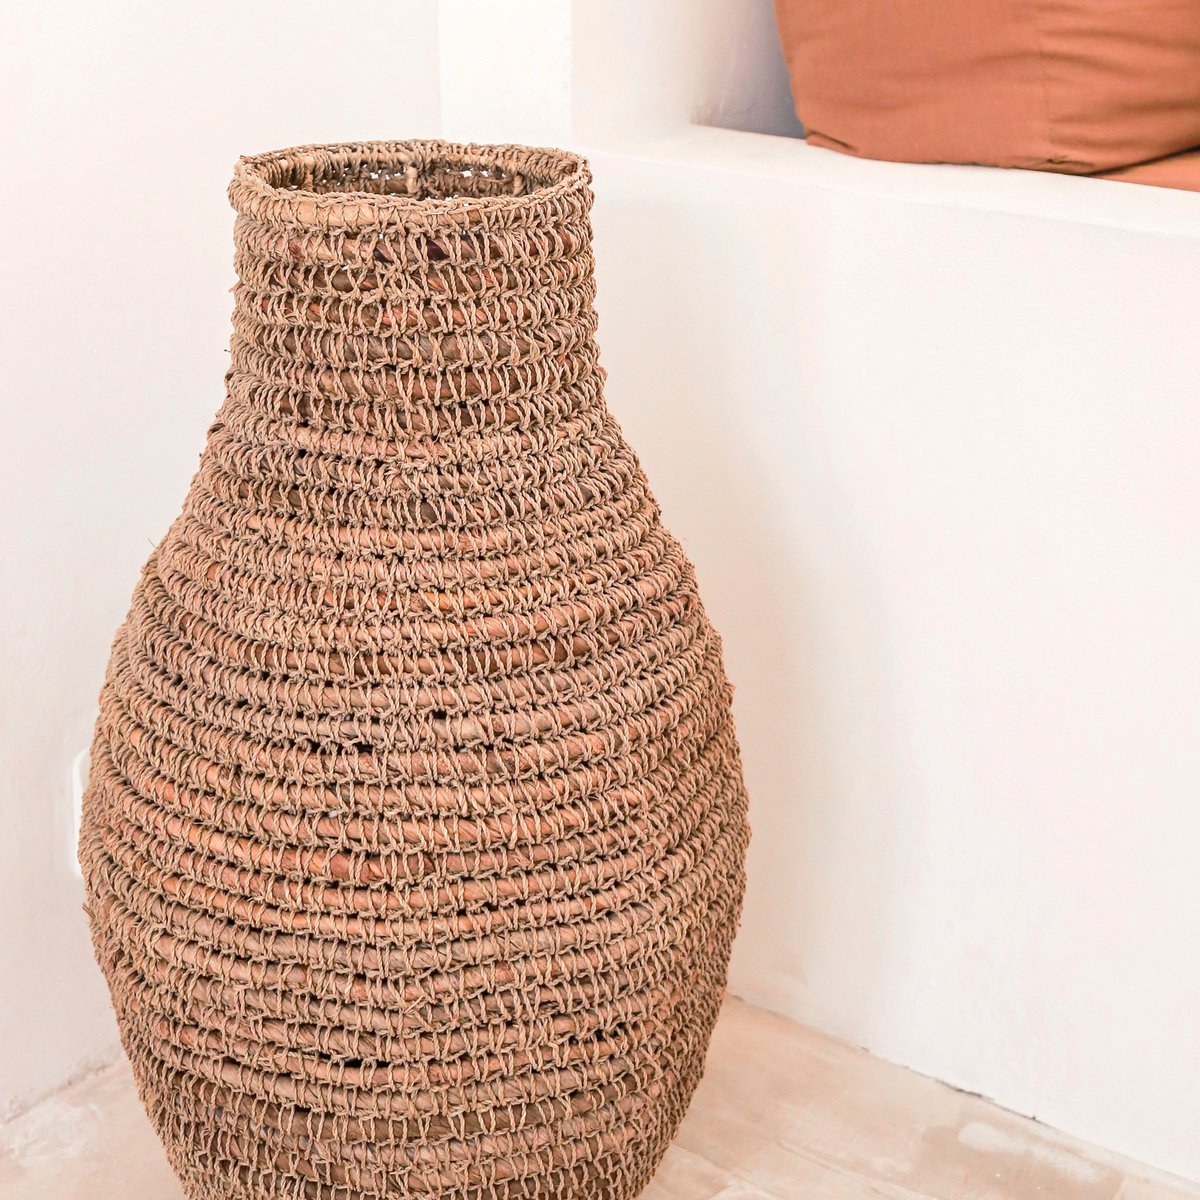 Woven boho vase SAKRA made of banana fibers and raffia